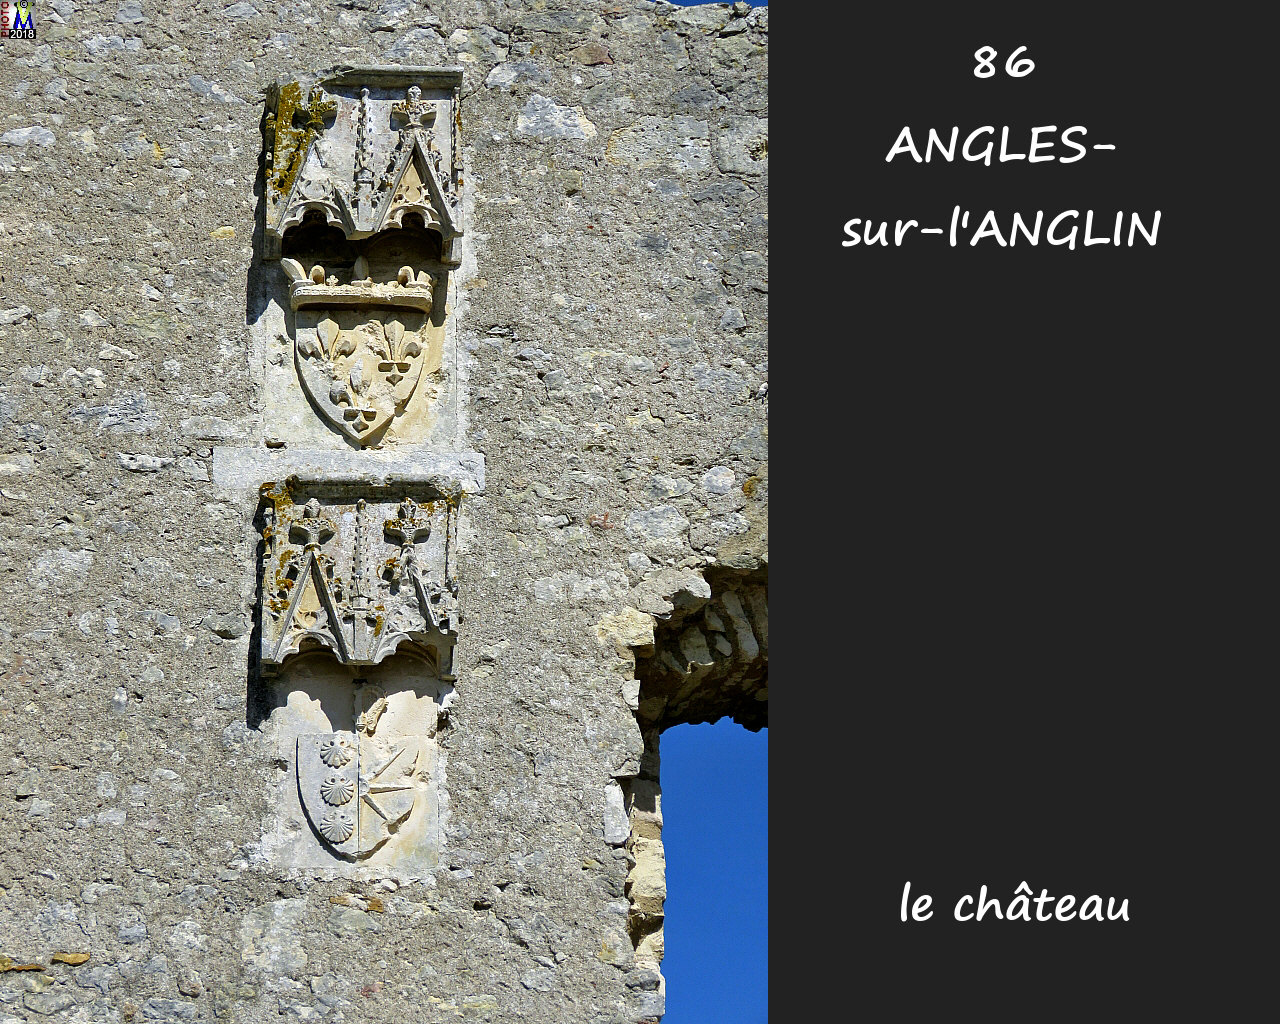 86ANGLES-S-ANGLIN_chateau_1126.jpg